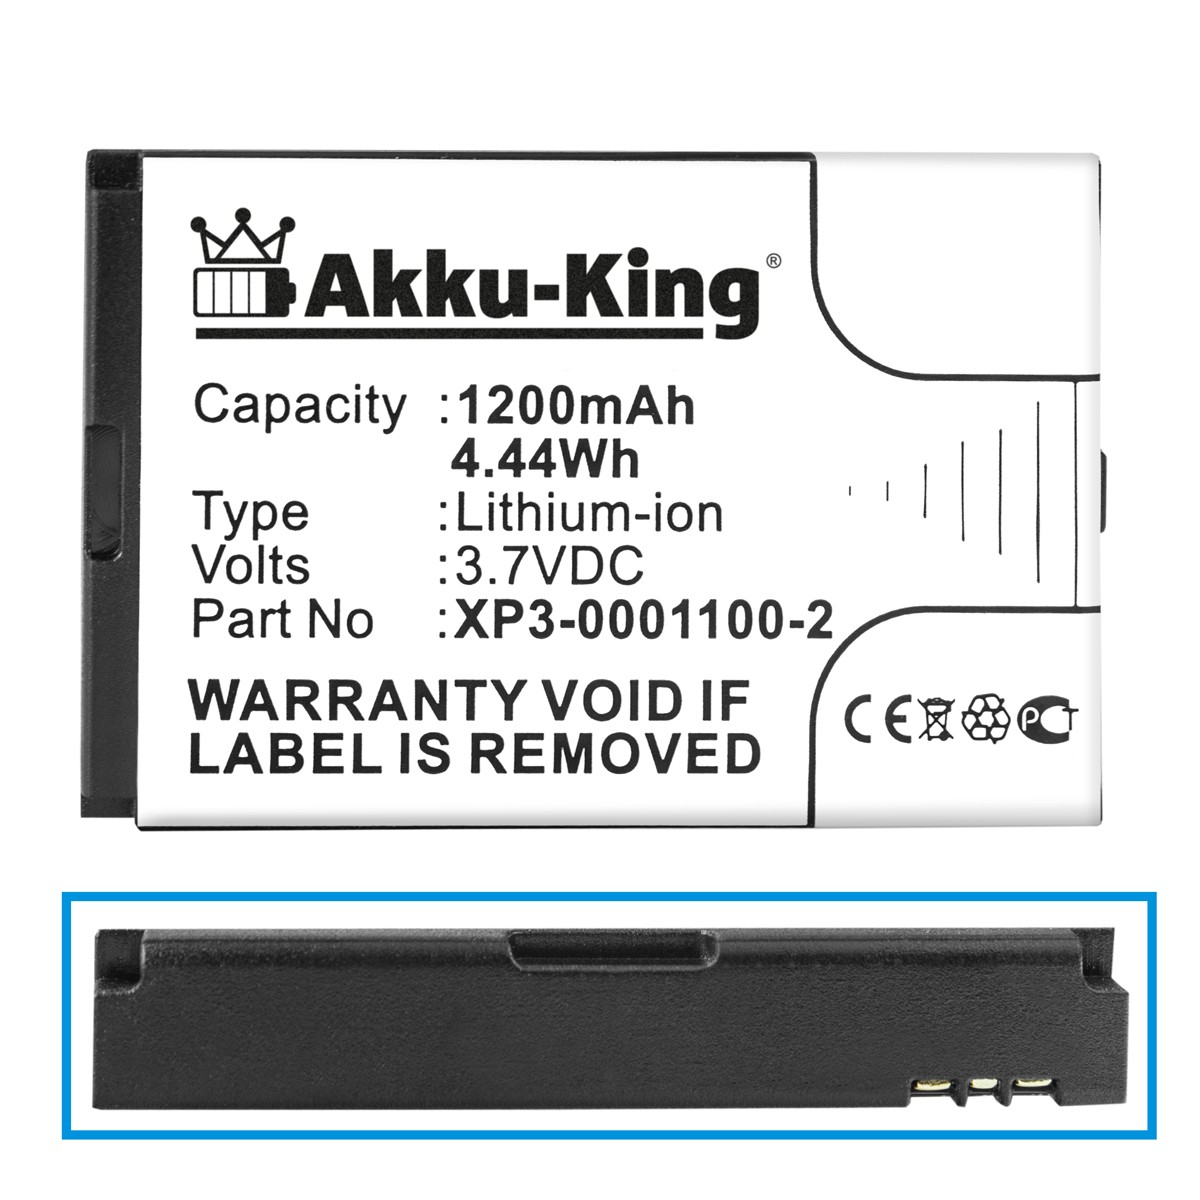 AKKU-KING Akku Li-Ion Volt, mit 3.7 1200mAh XP3-0001100-2 kompatibel Socketmobile Handy-Akku